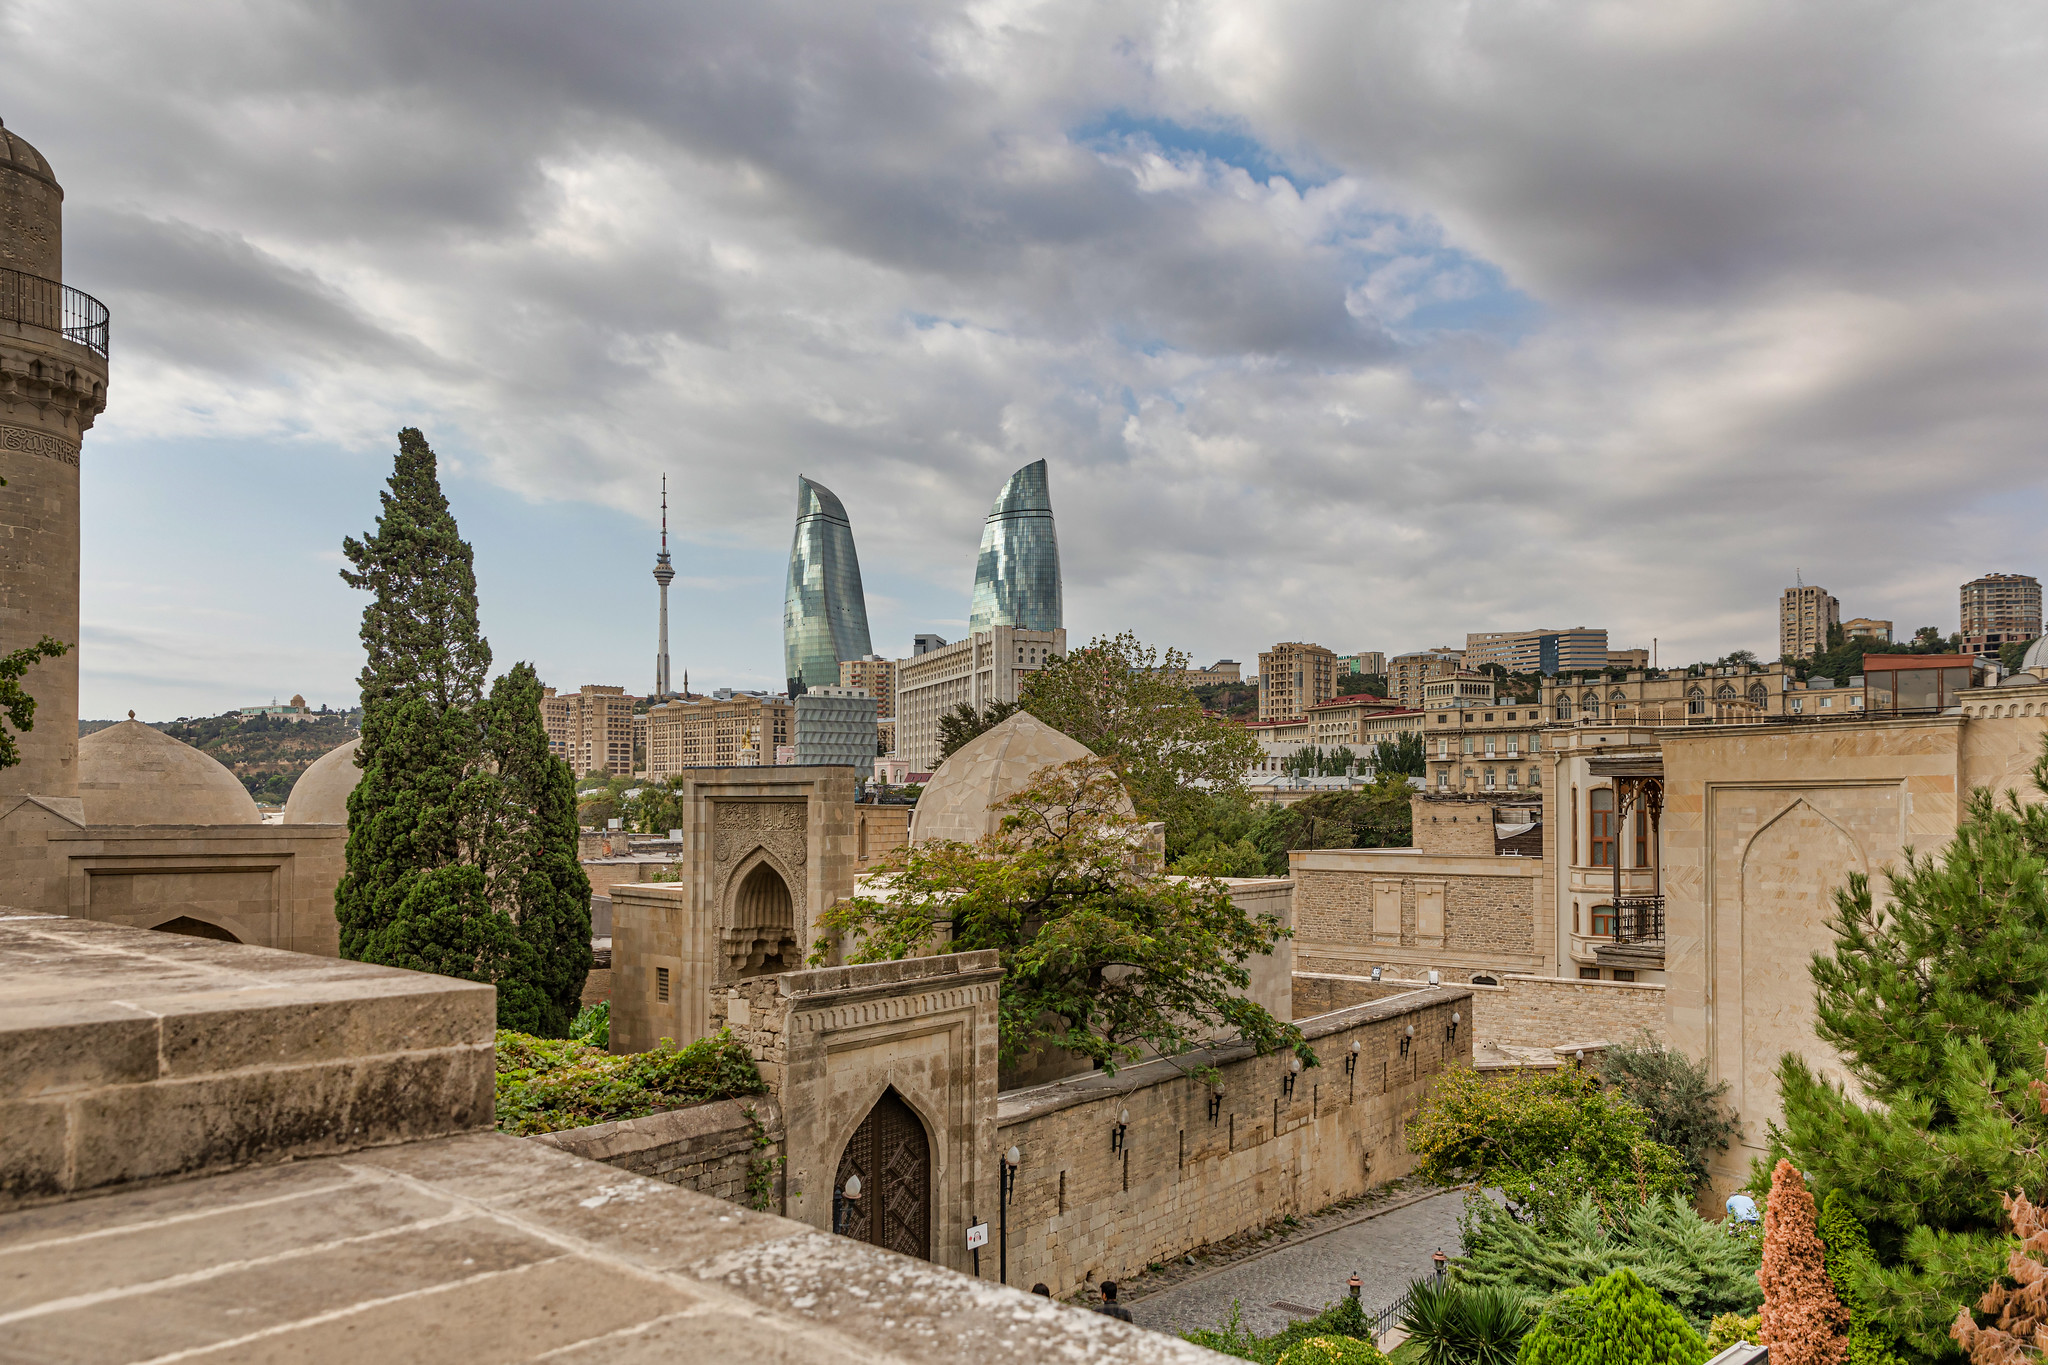 Travel Guide to Baku, Azerbaijan [with Sample Itinerary]